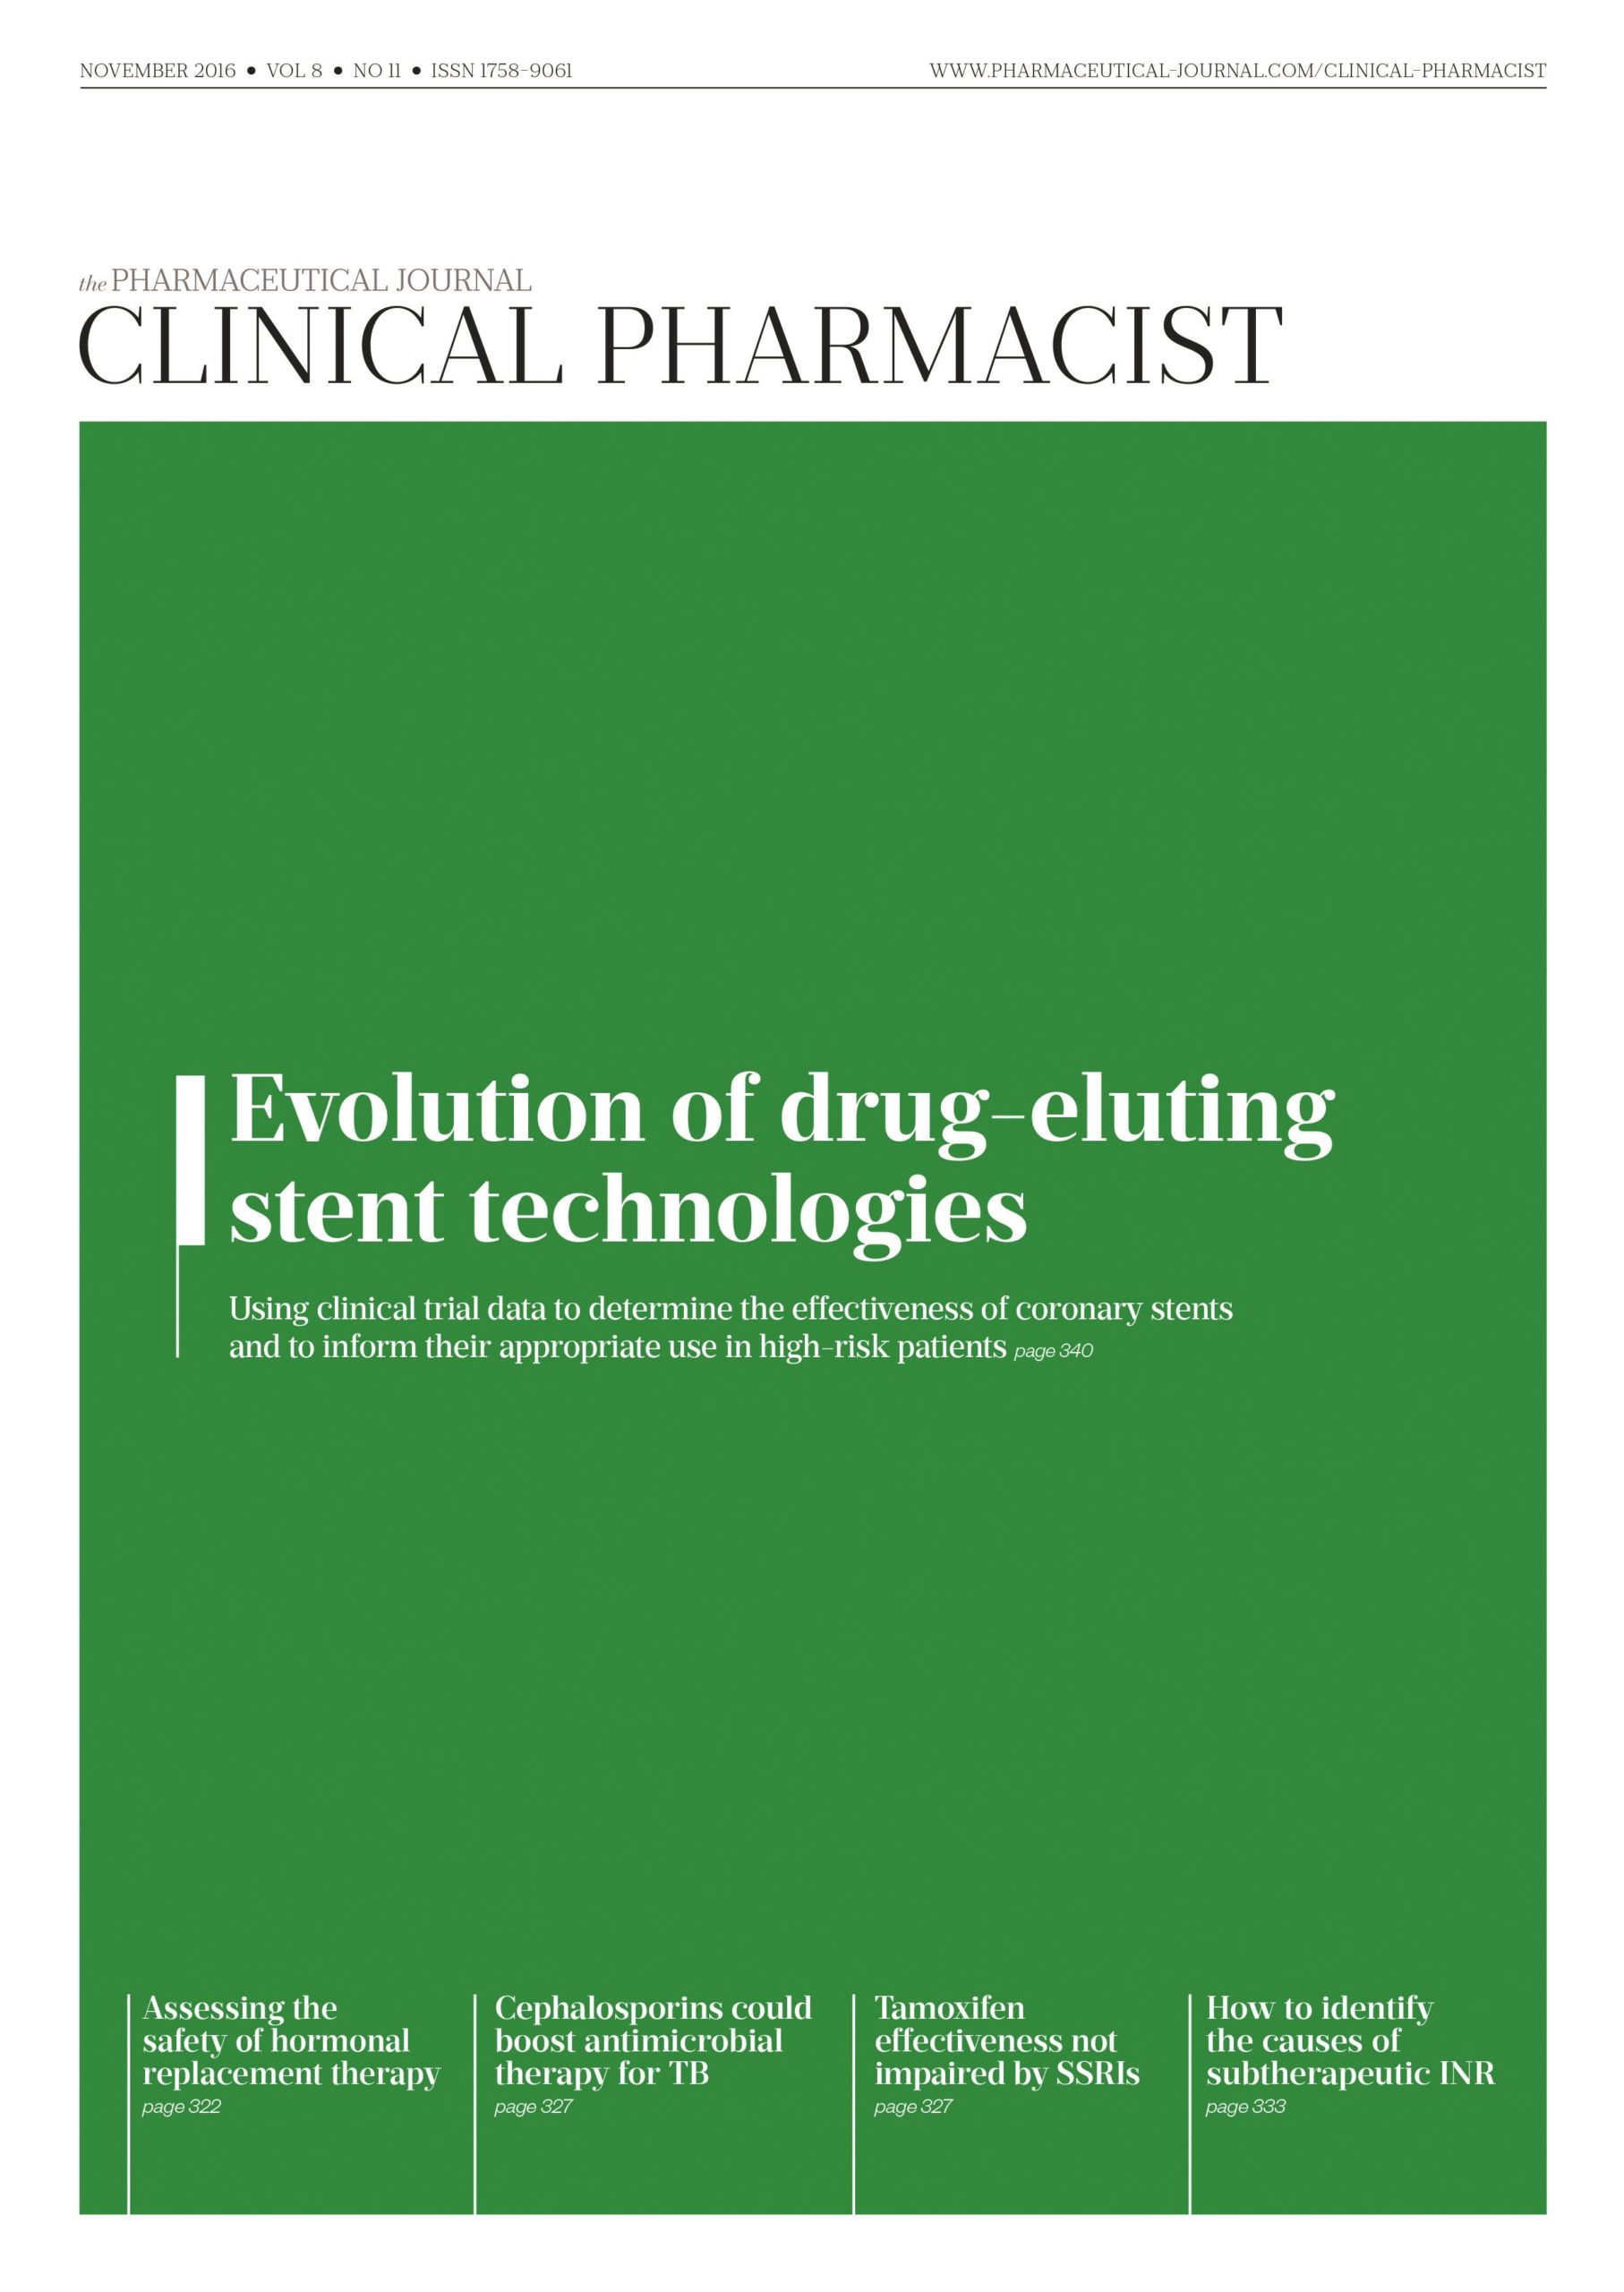 Publication issue cover for CP, November 2016, Vol 8, No 11